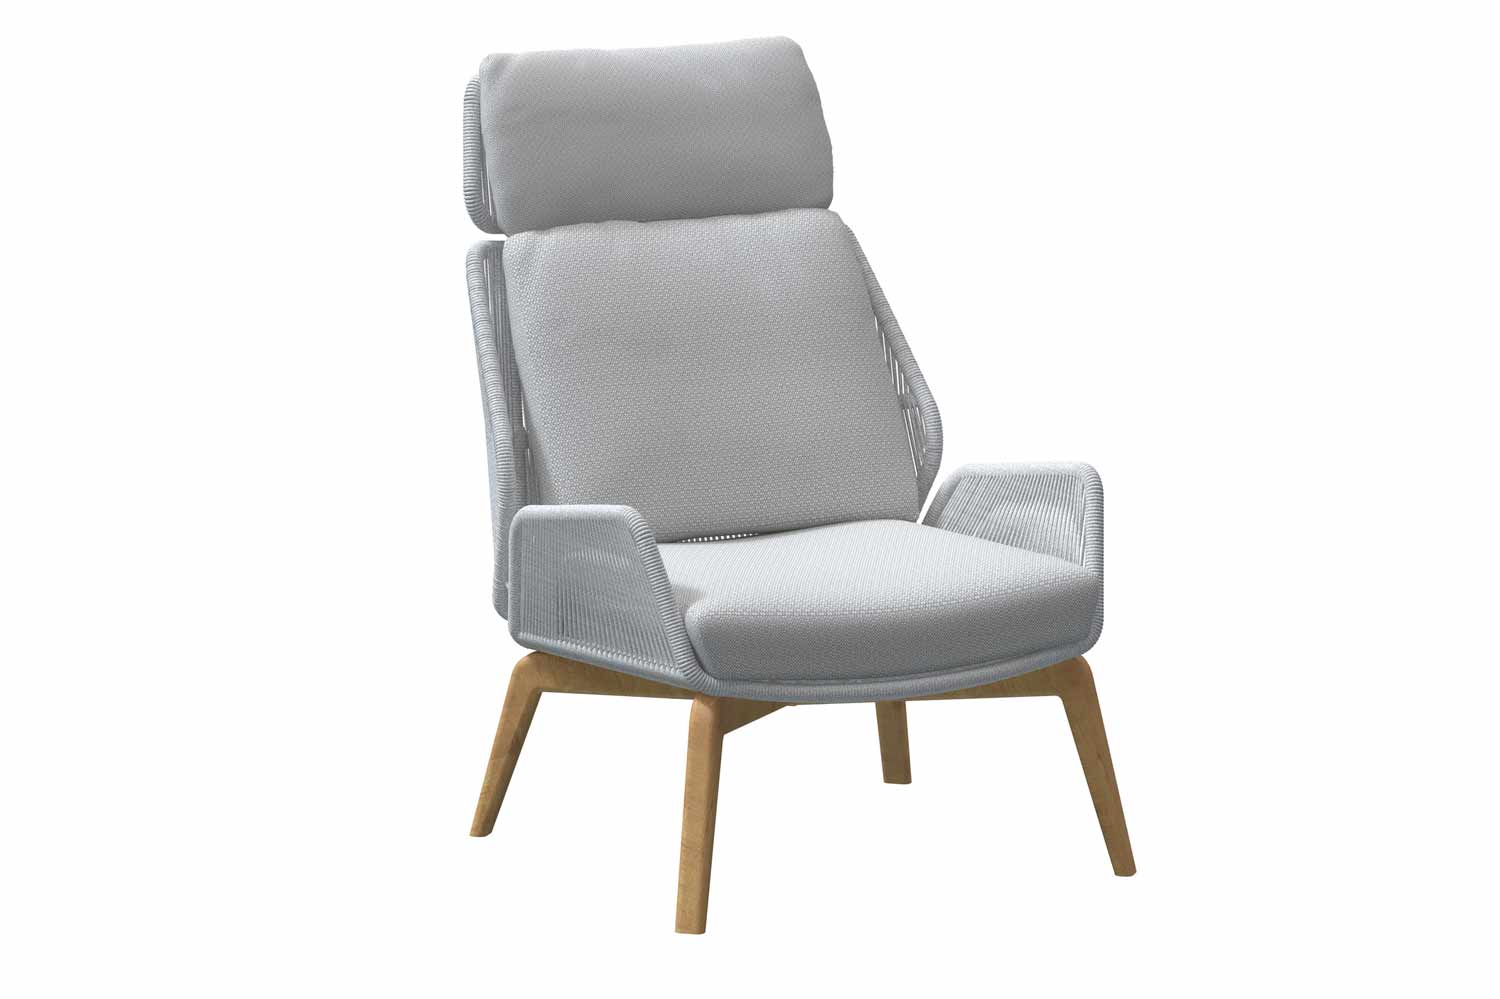 213704 - Carthago teak living chair Frozen with 2 cushions